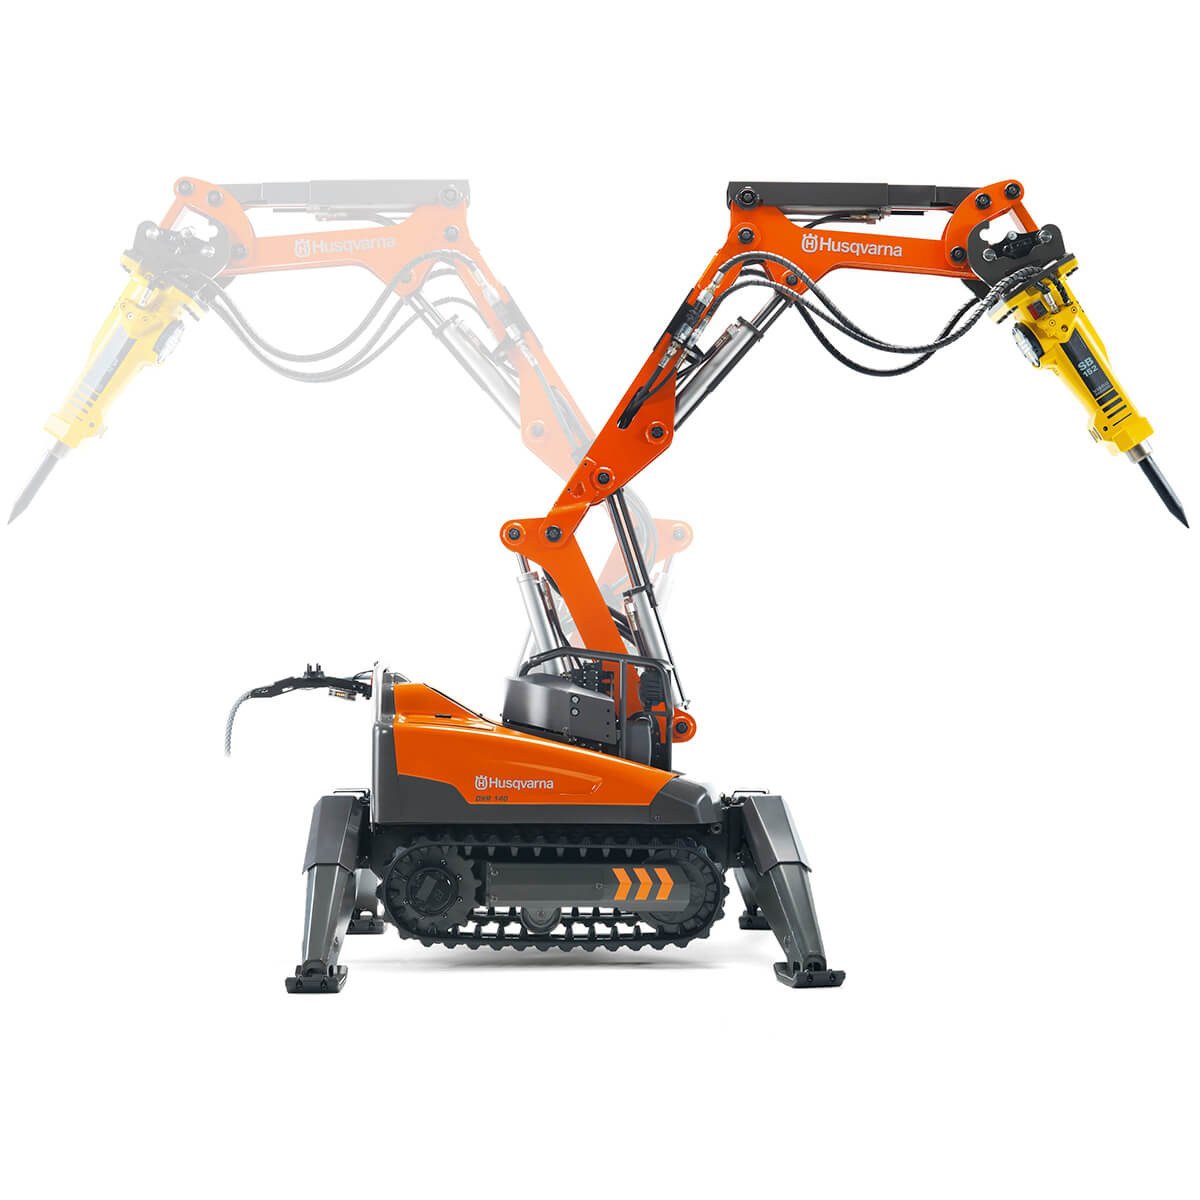 Husqvarna DXR 140 Remote Controlled Demolition Robot Excavation